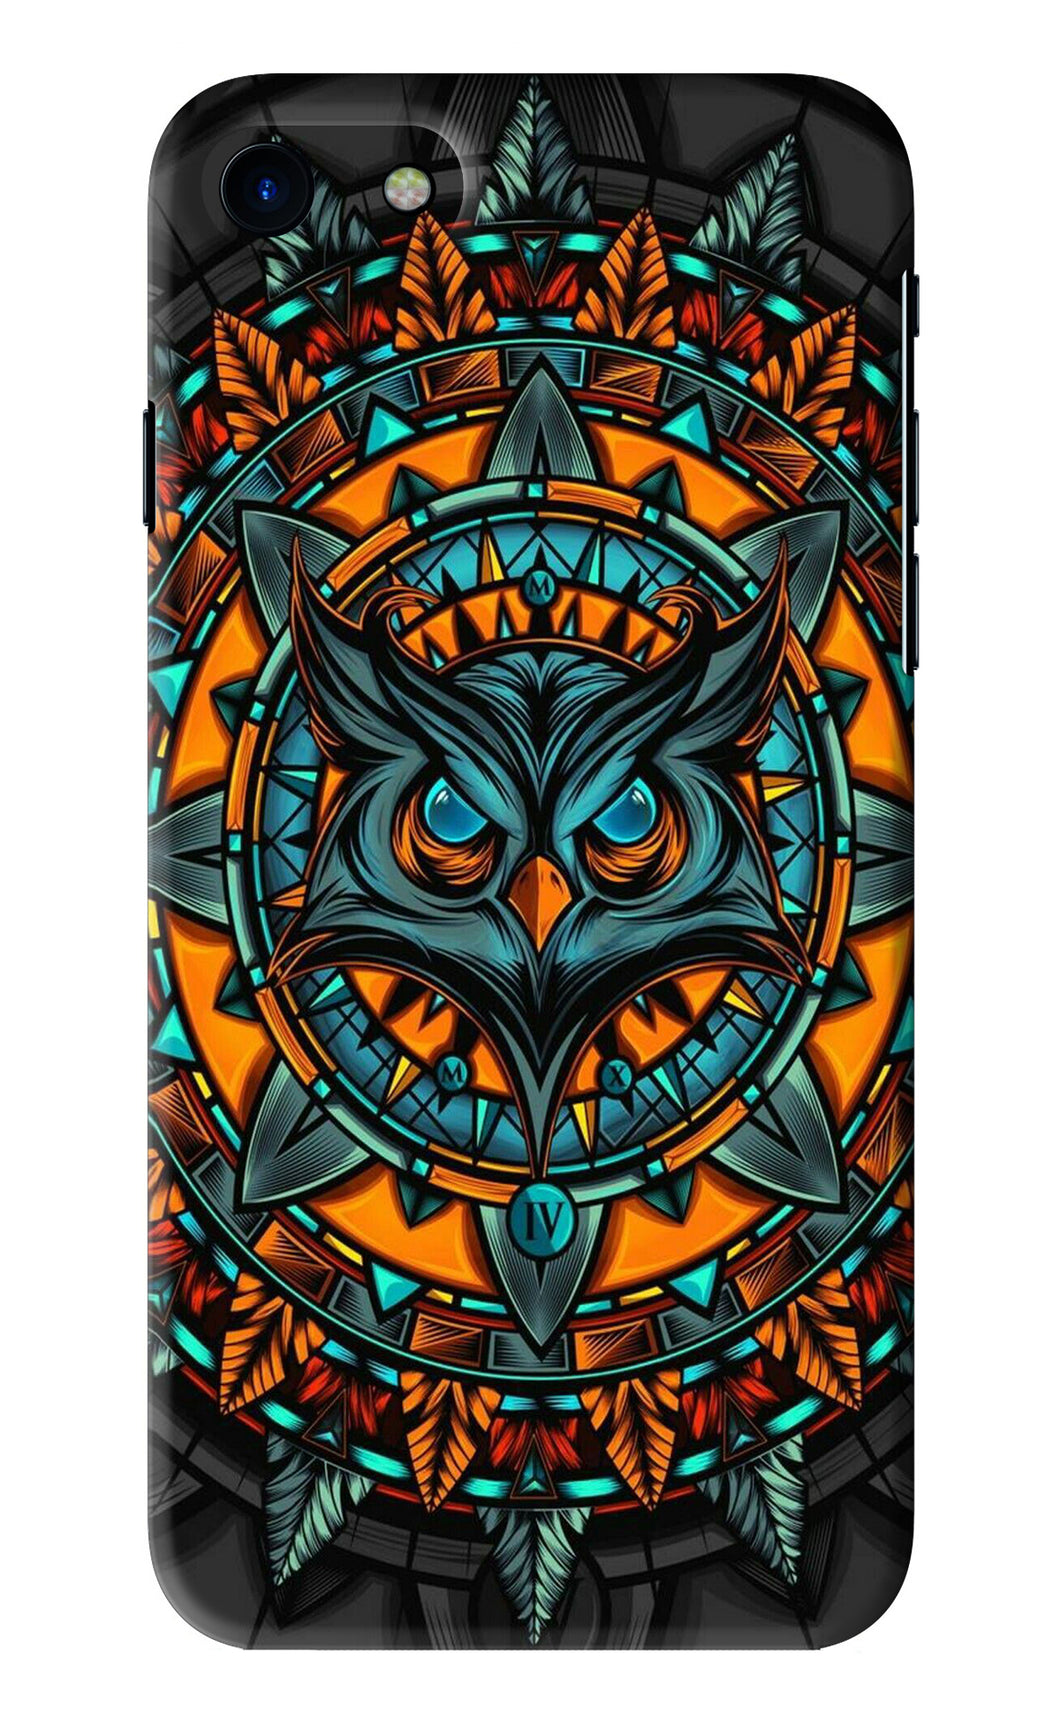 Angry Owl Art iPhone SE 2020 Back Skin Wrap